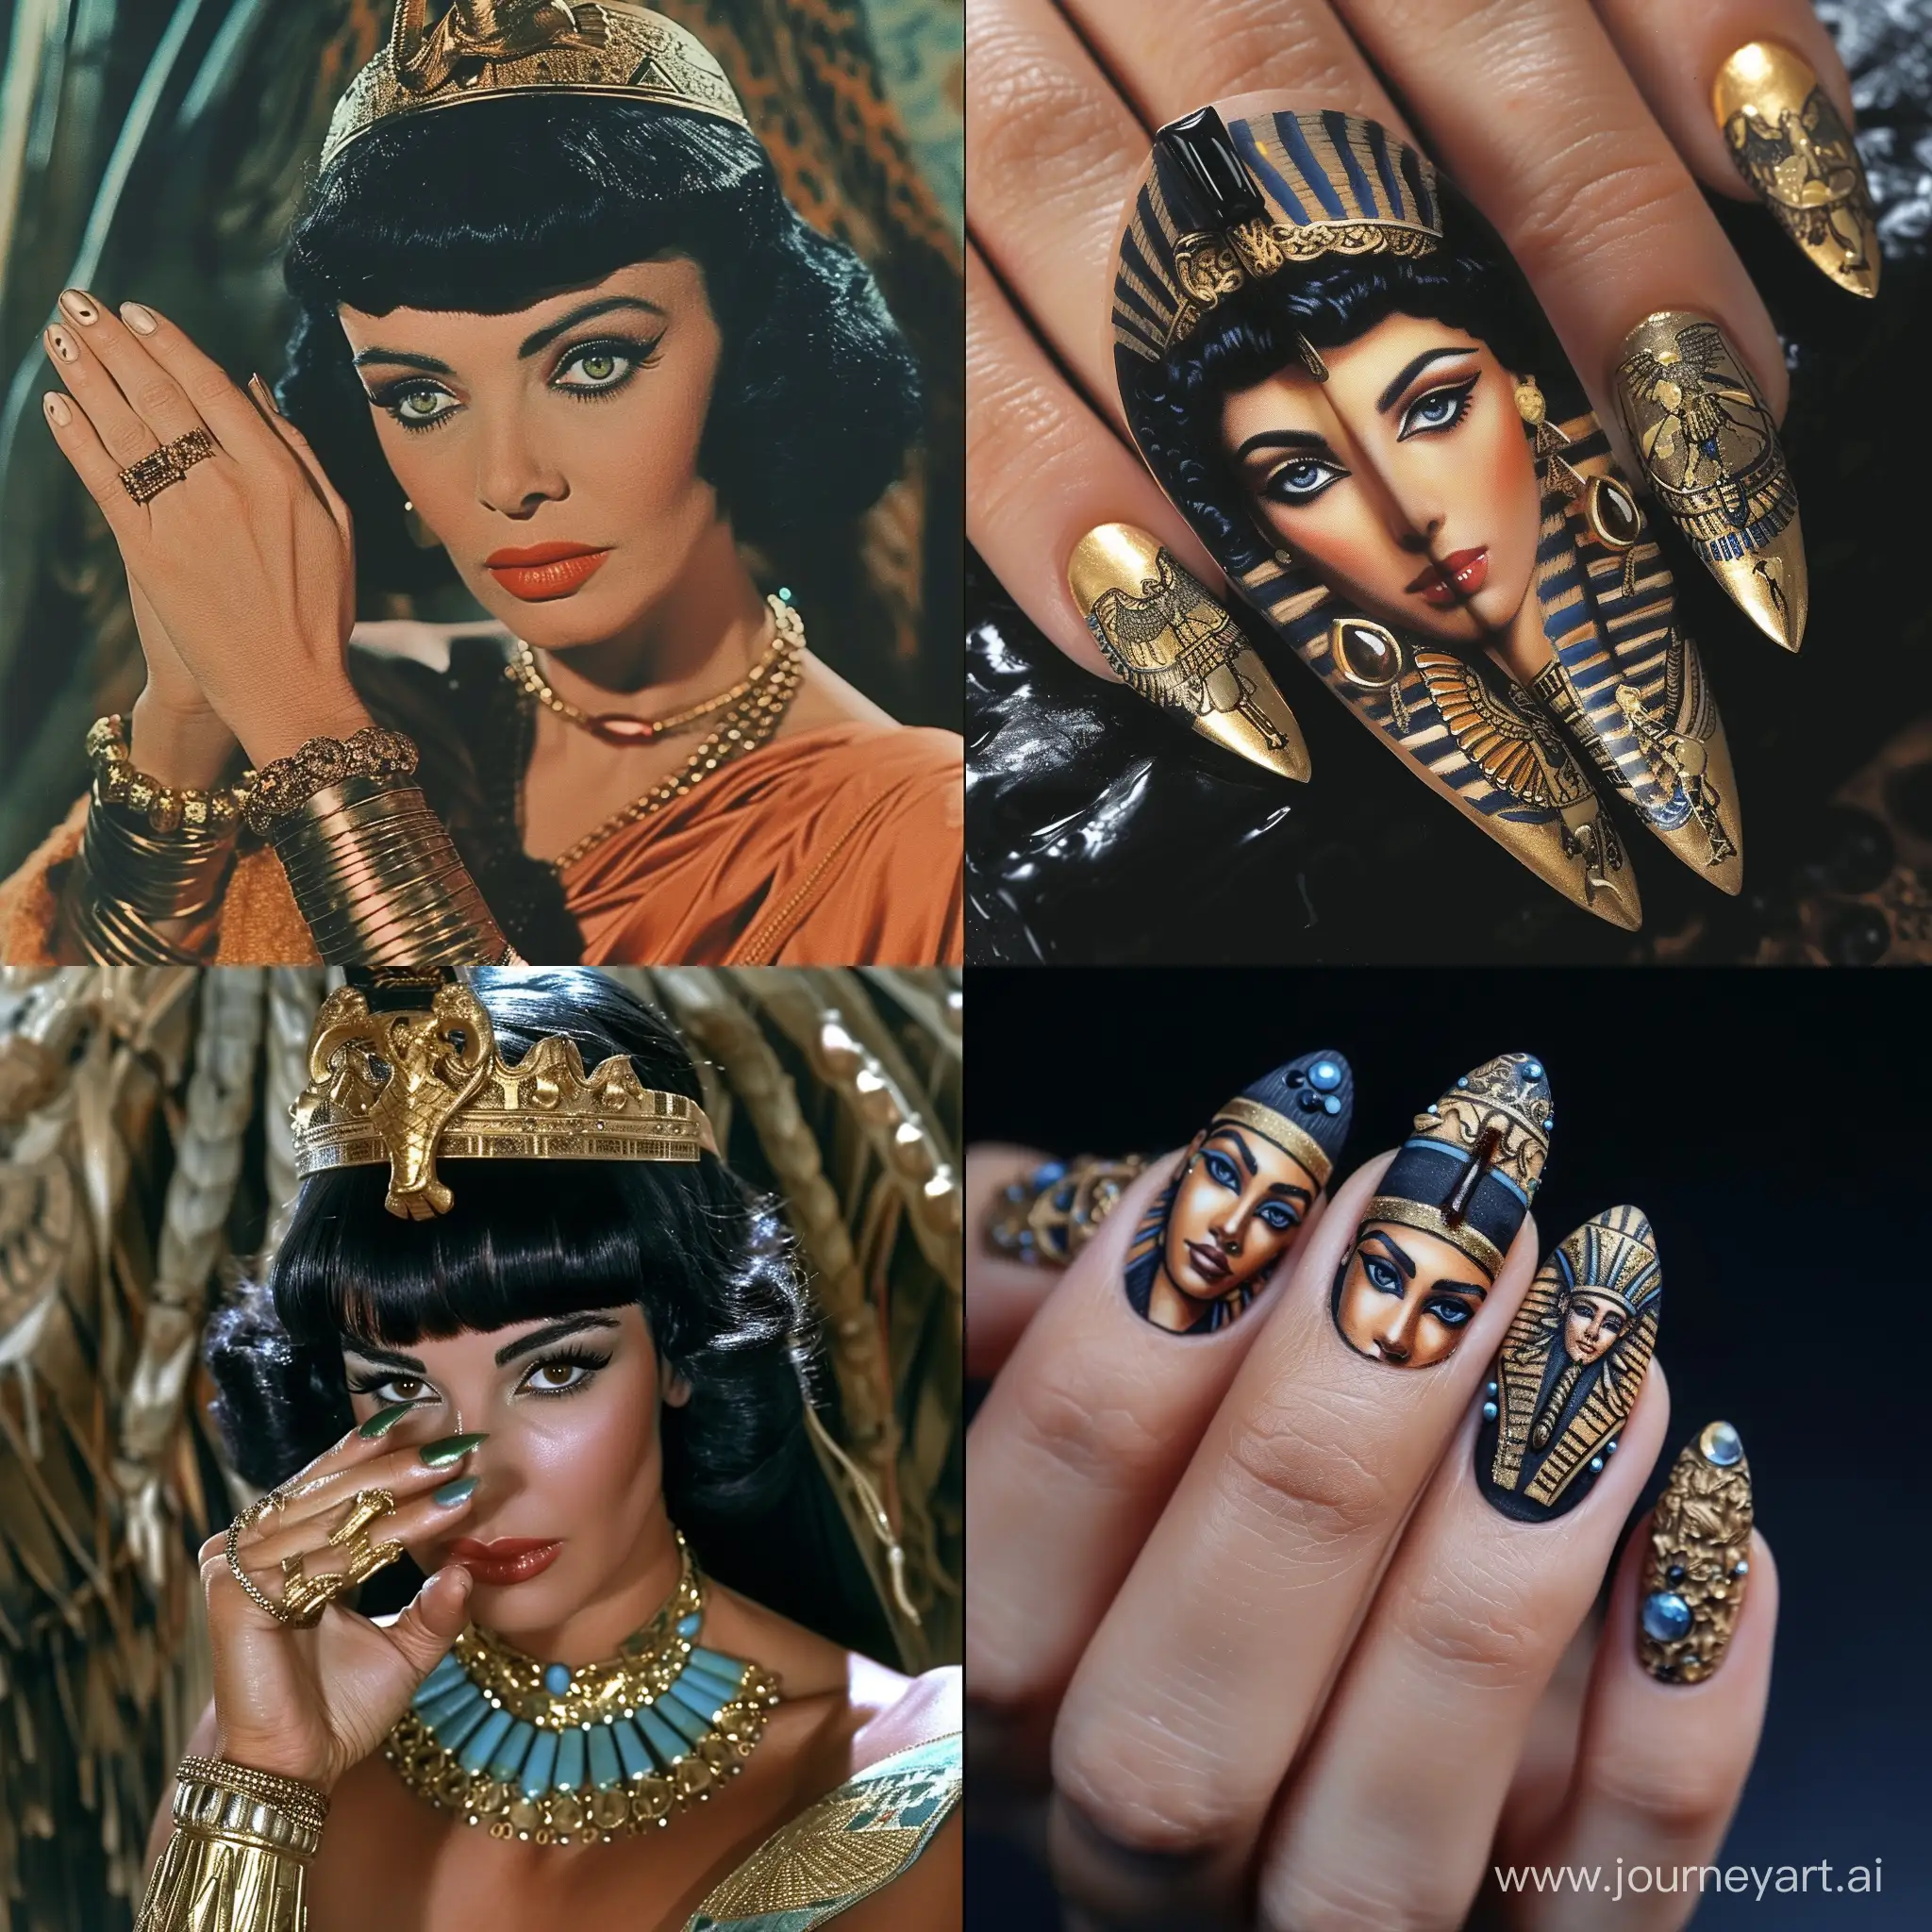 Cleopatra gets a manicure